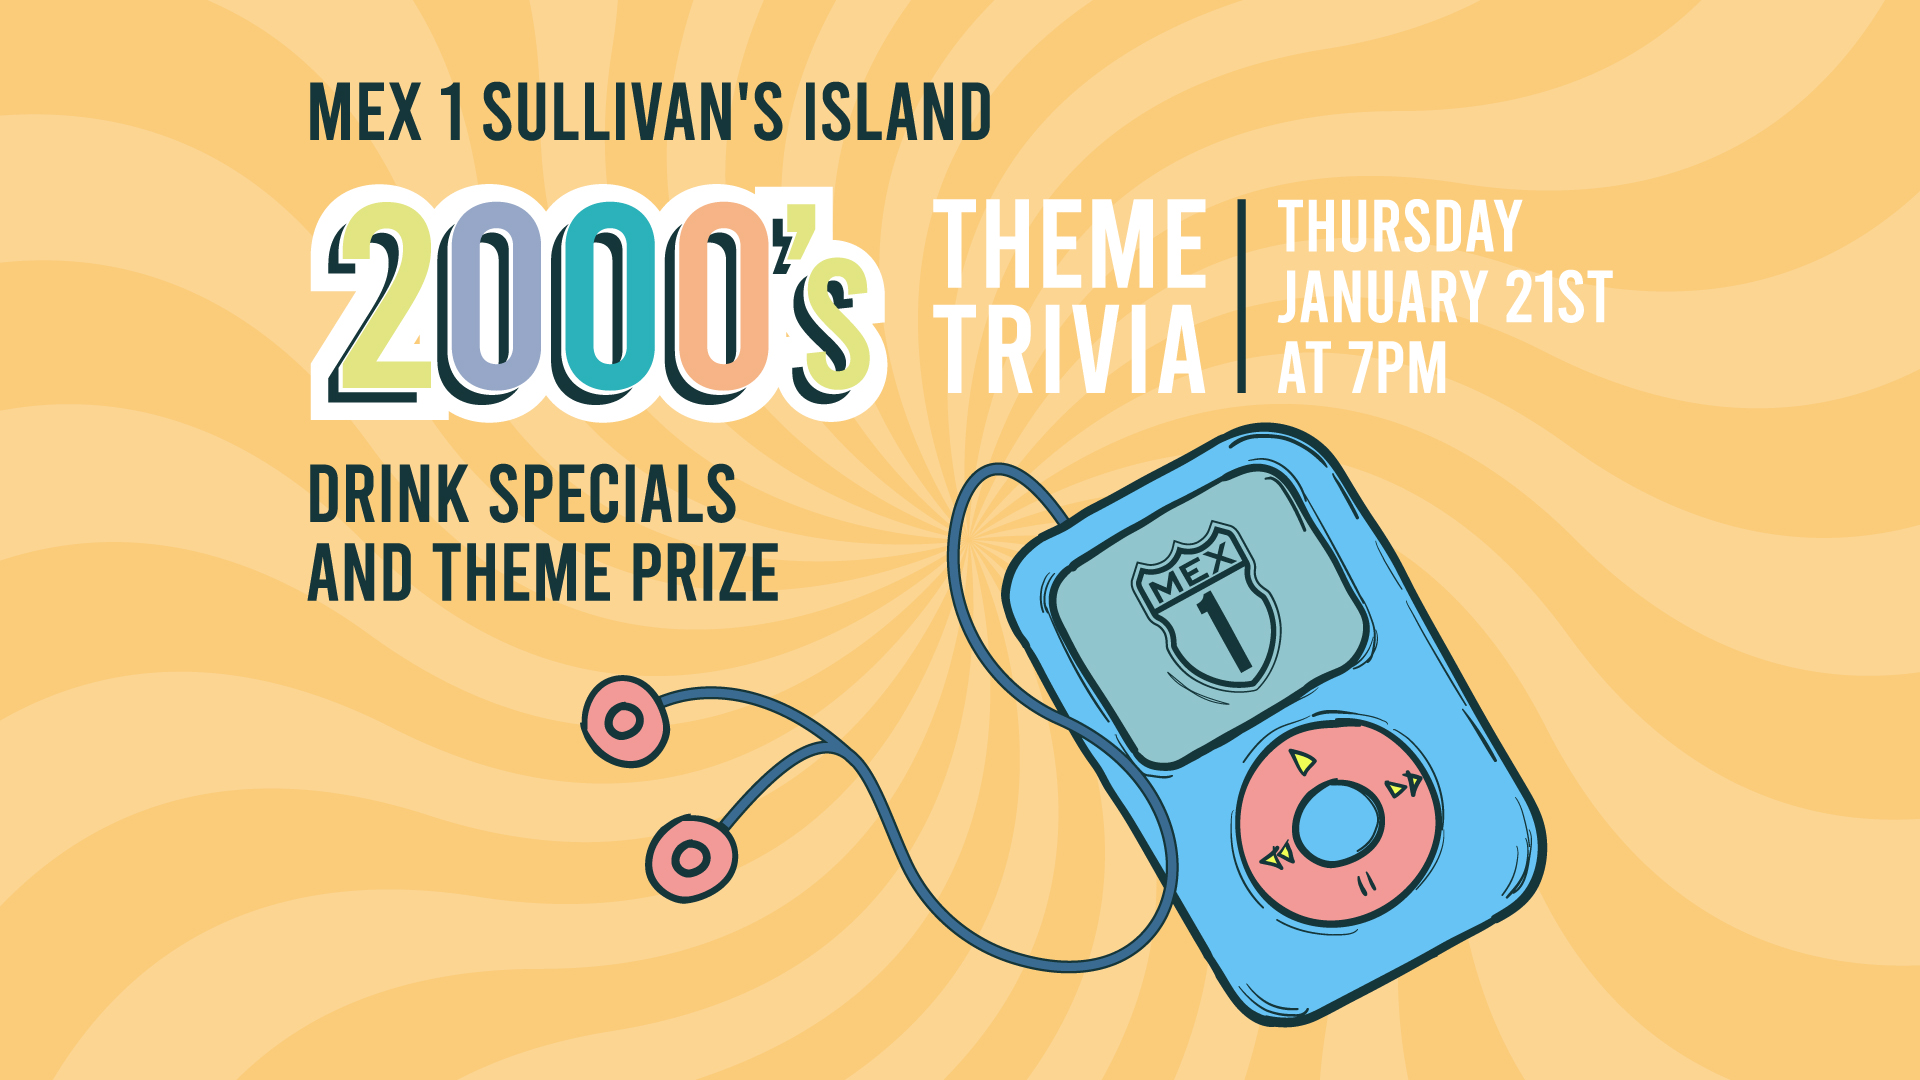 2000s Theme Trivia at Mex 1 Sullivan's Island